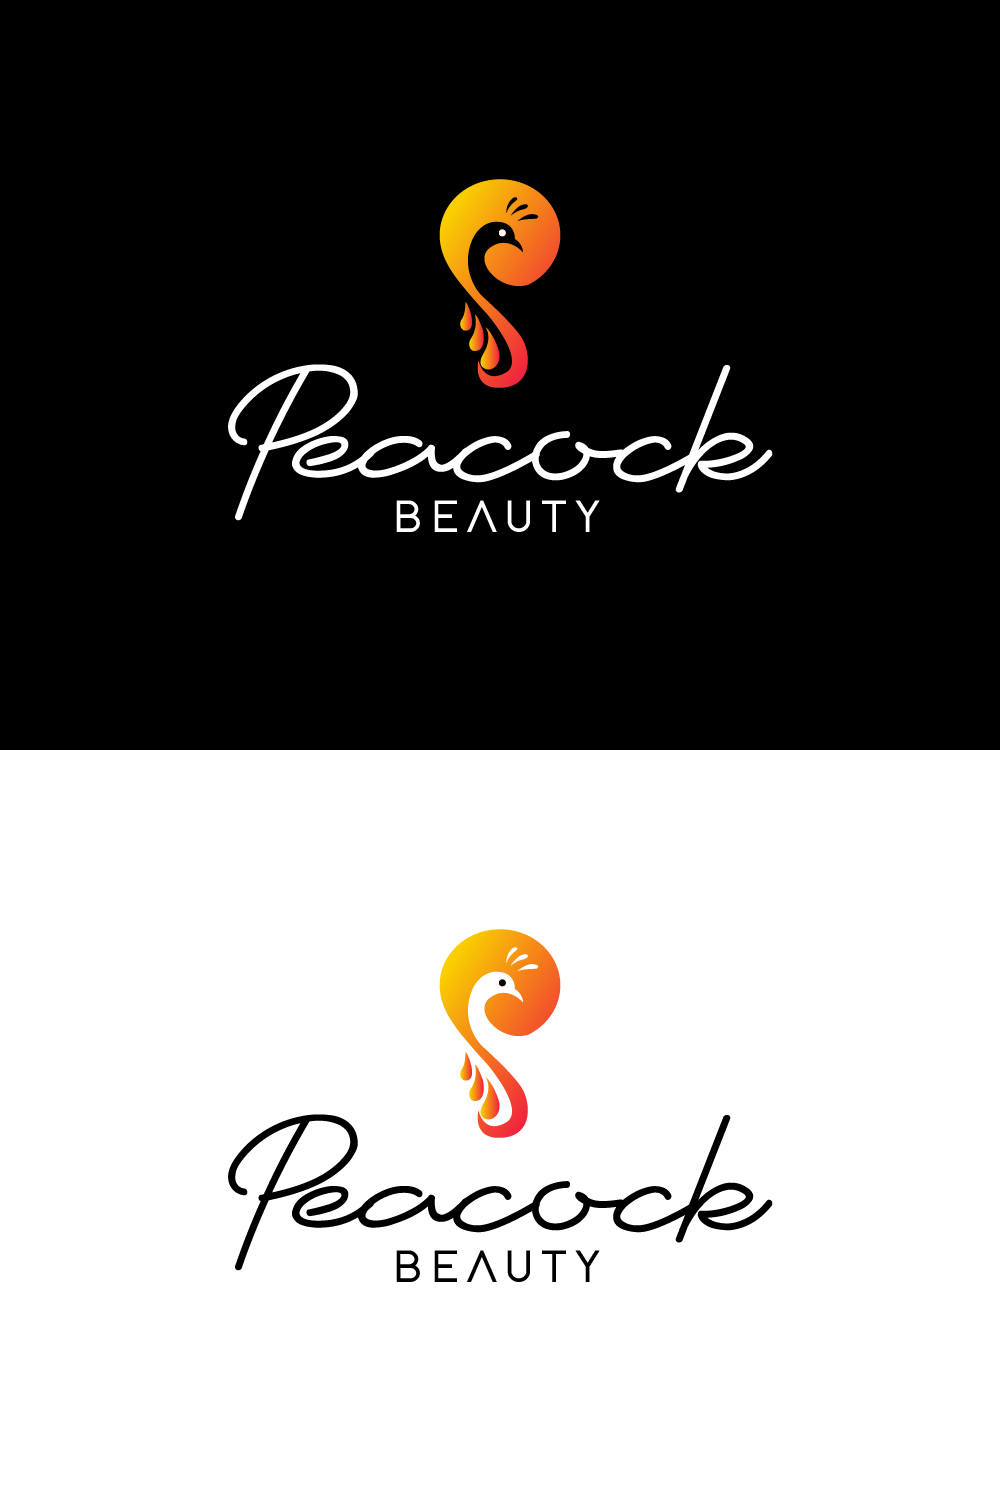 Peacock Beauty Logo Vector Template pinterest image.